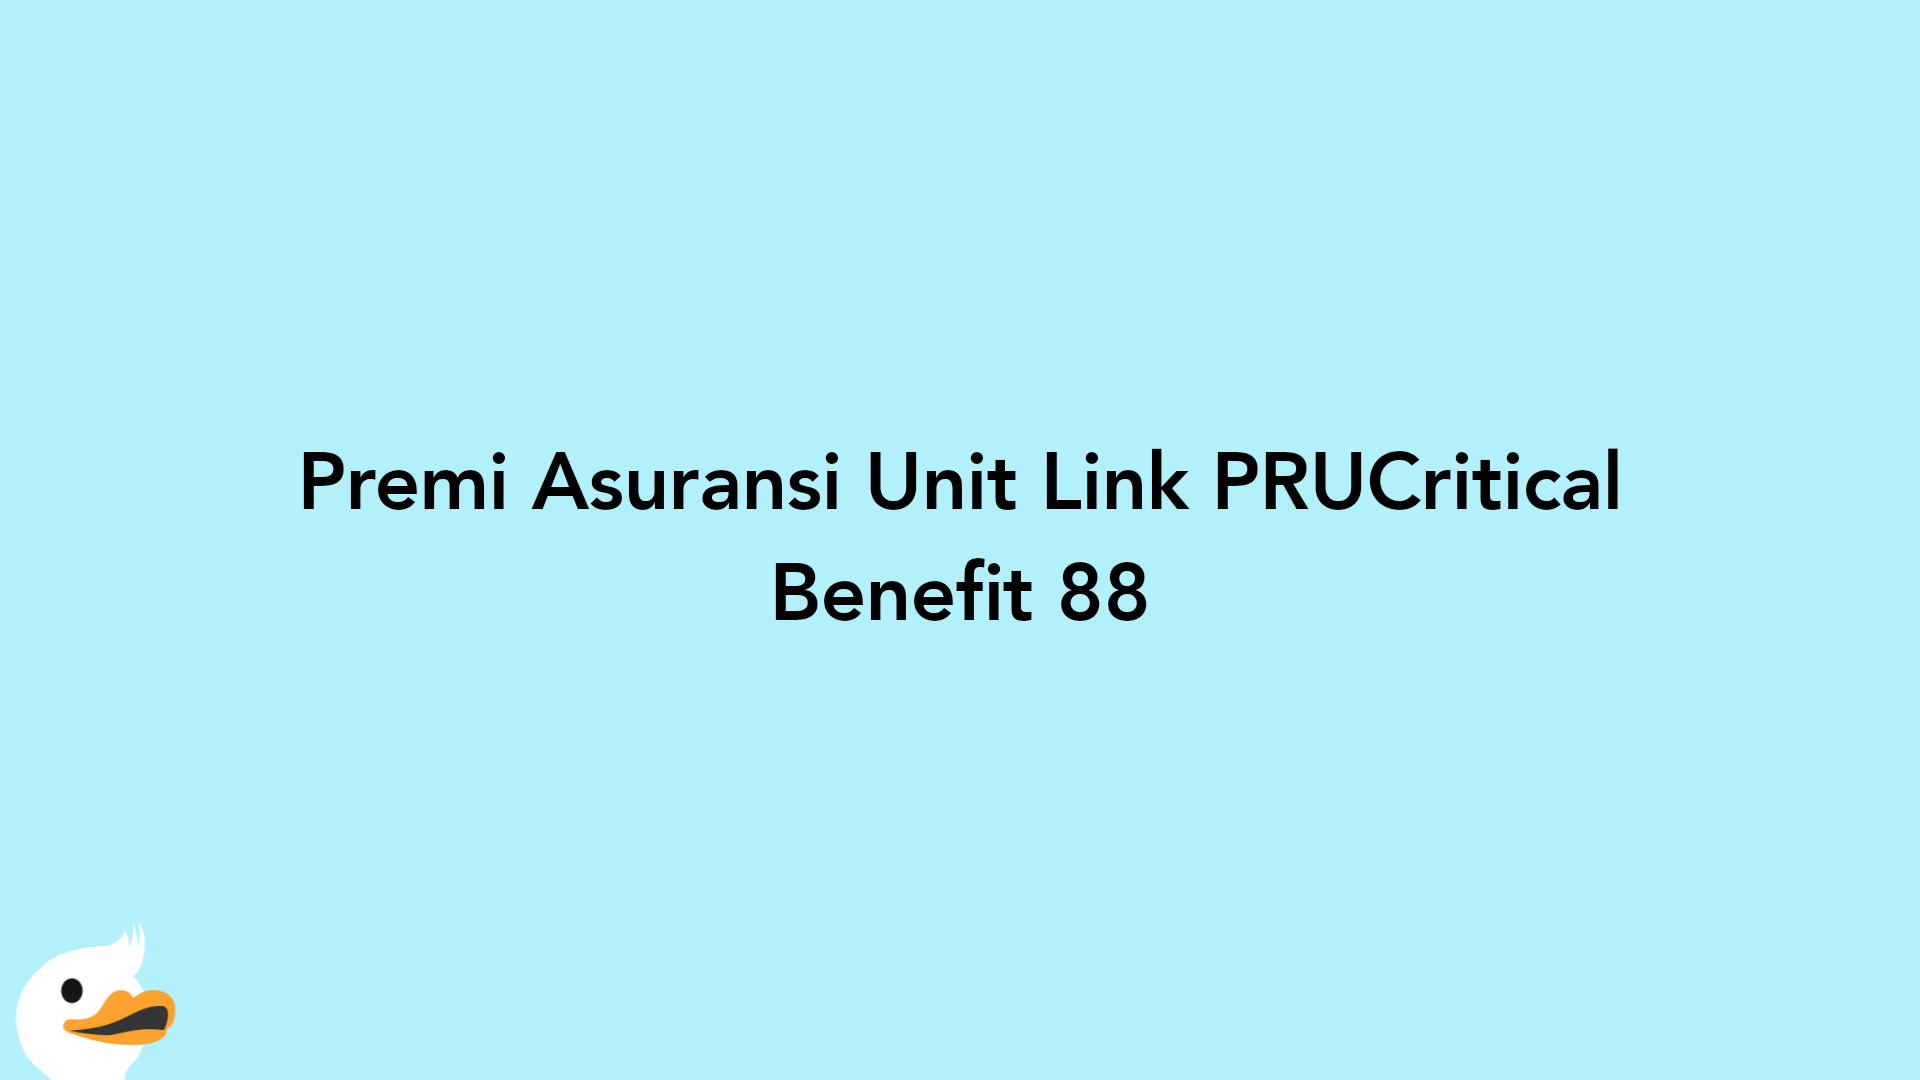 Premi Asuransi Unit Link PRUCritical Benefit 88